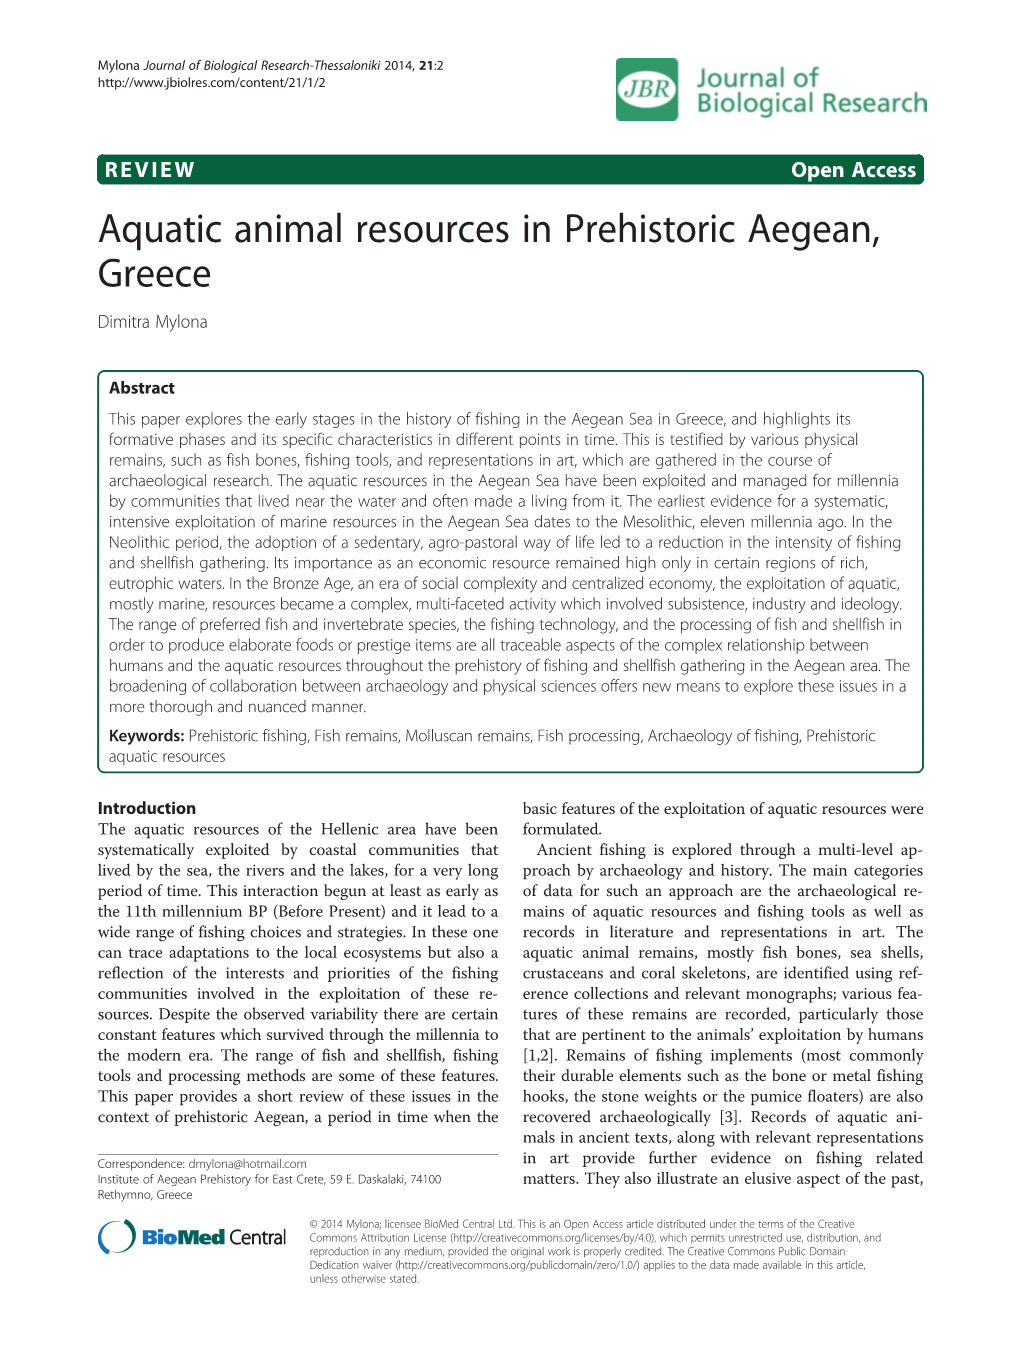 Aquatic Animal Resources in Prehistoric Aegean, Greece Dimitra Mylona